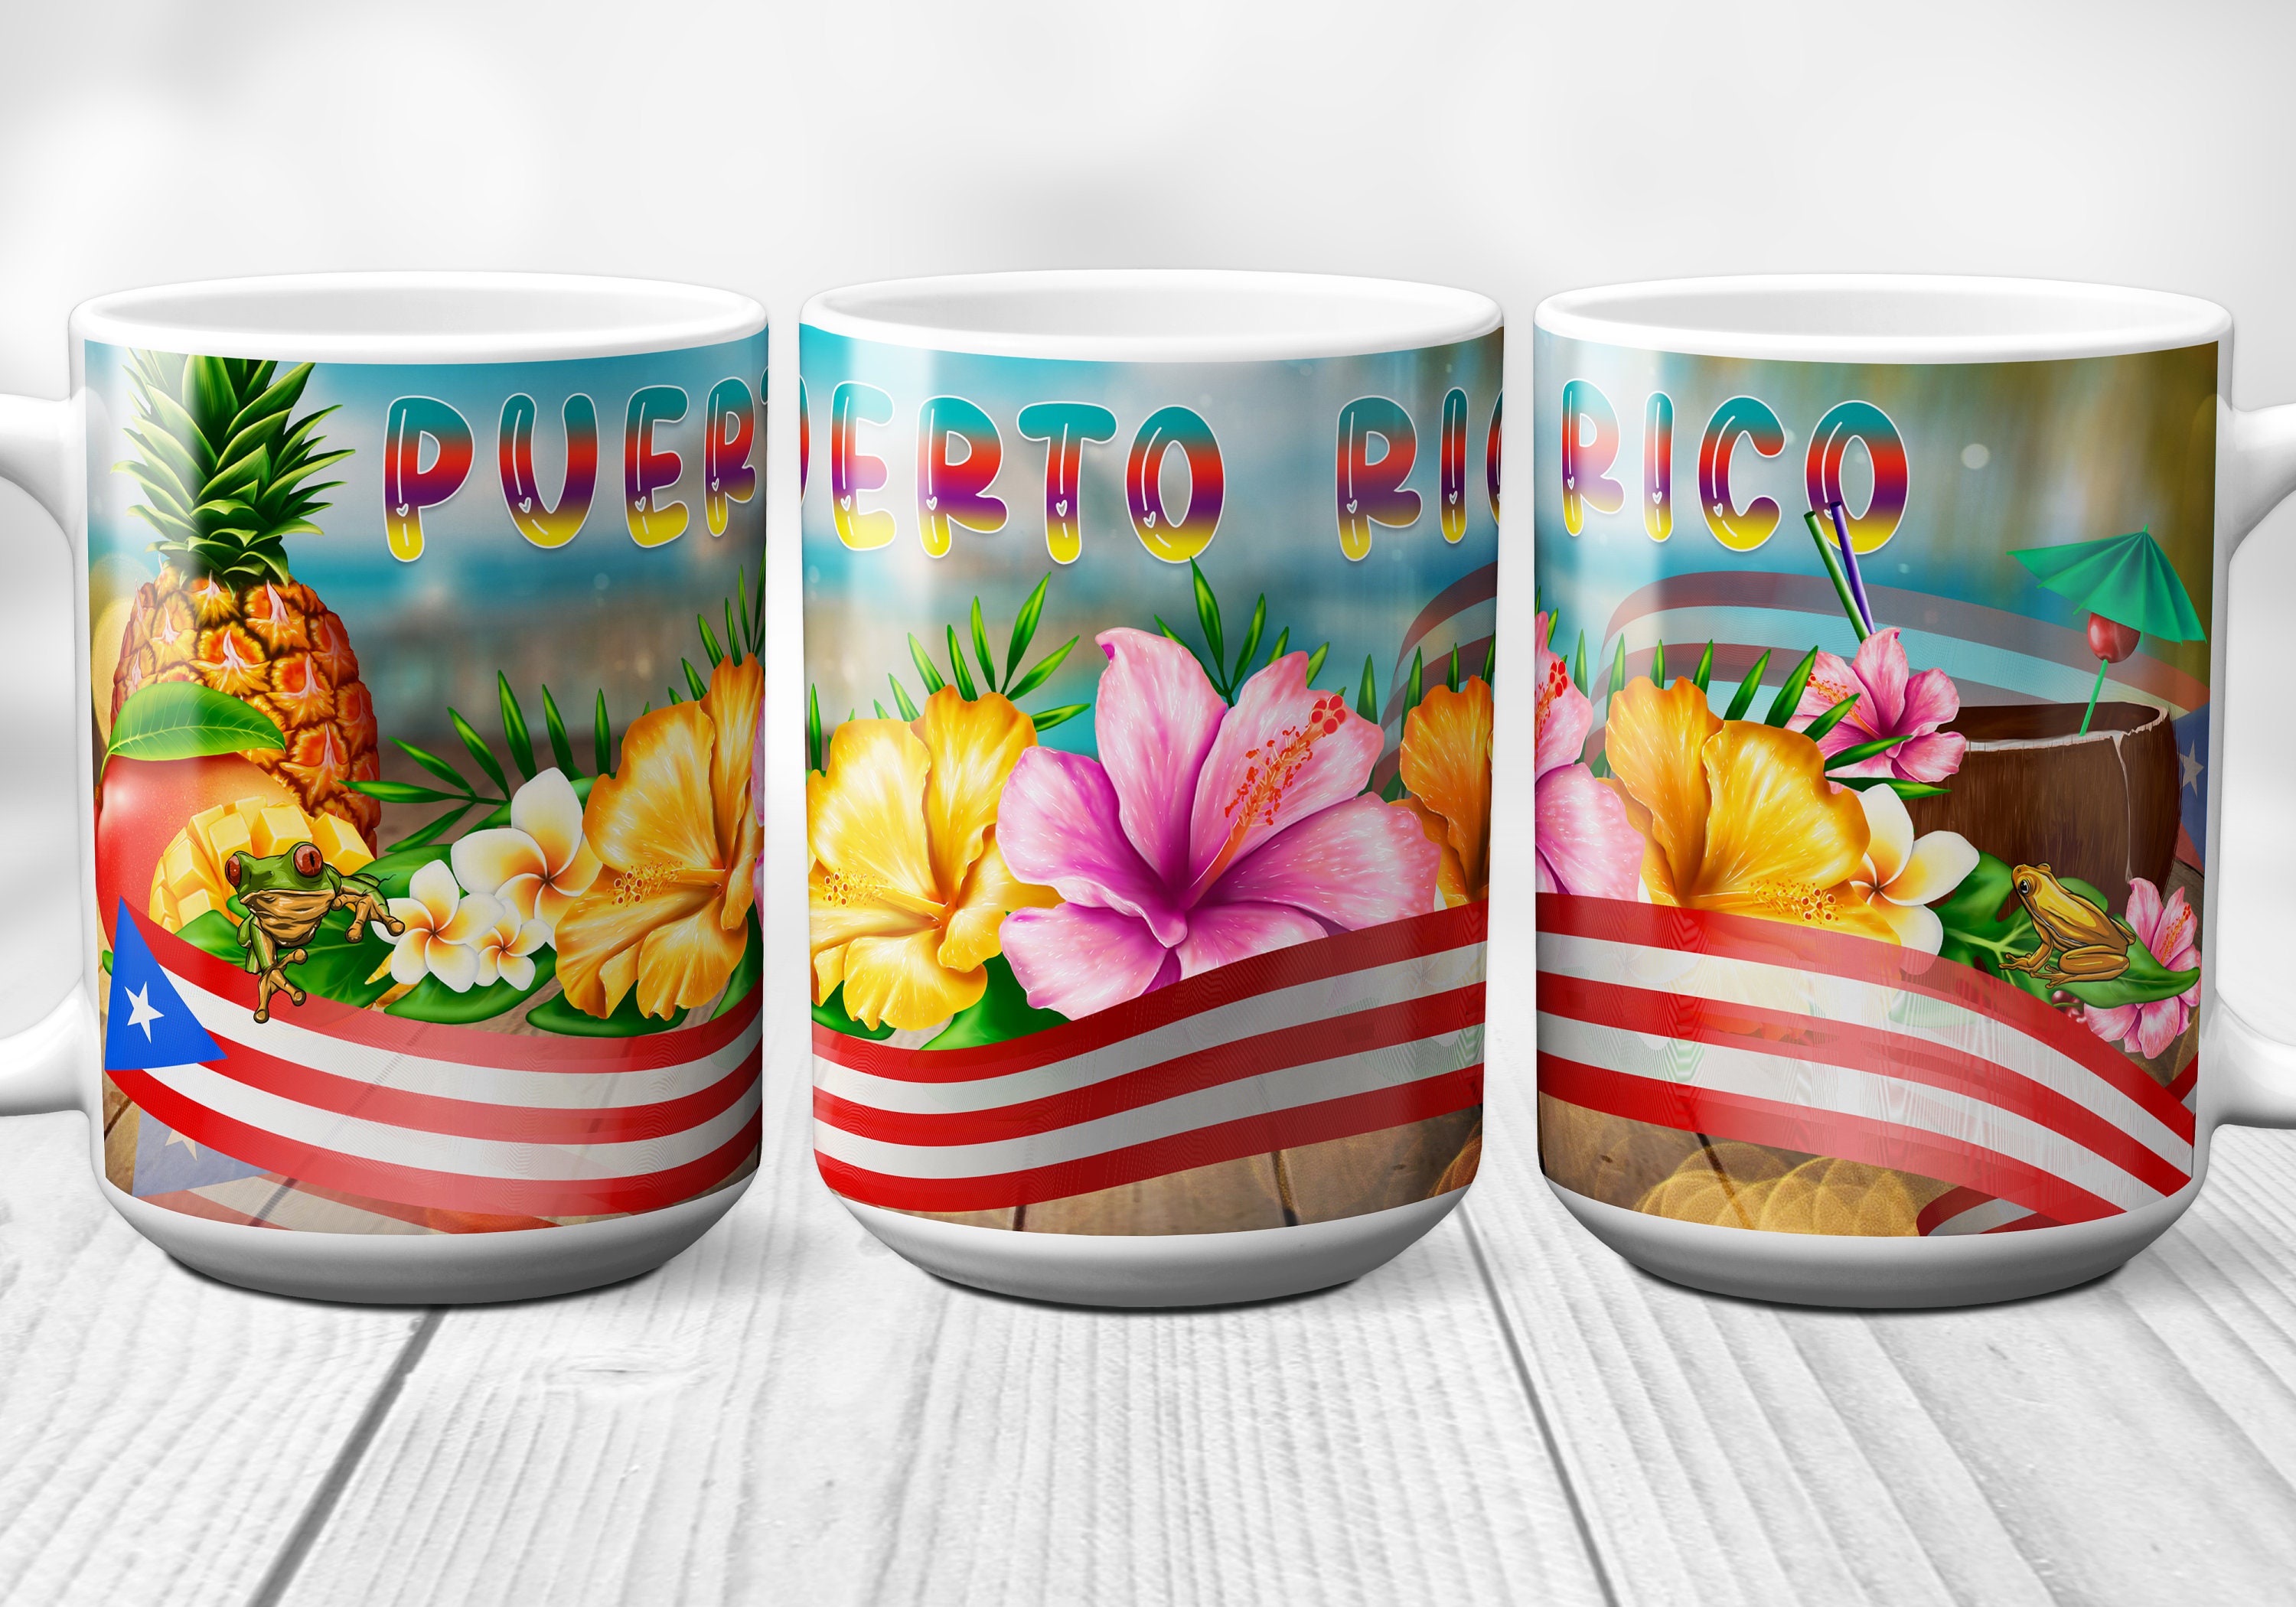 Photo Mug Sublimation Design Template for 11oz-15oz Coffee Mugs